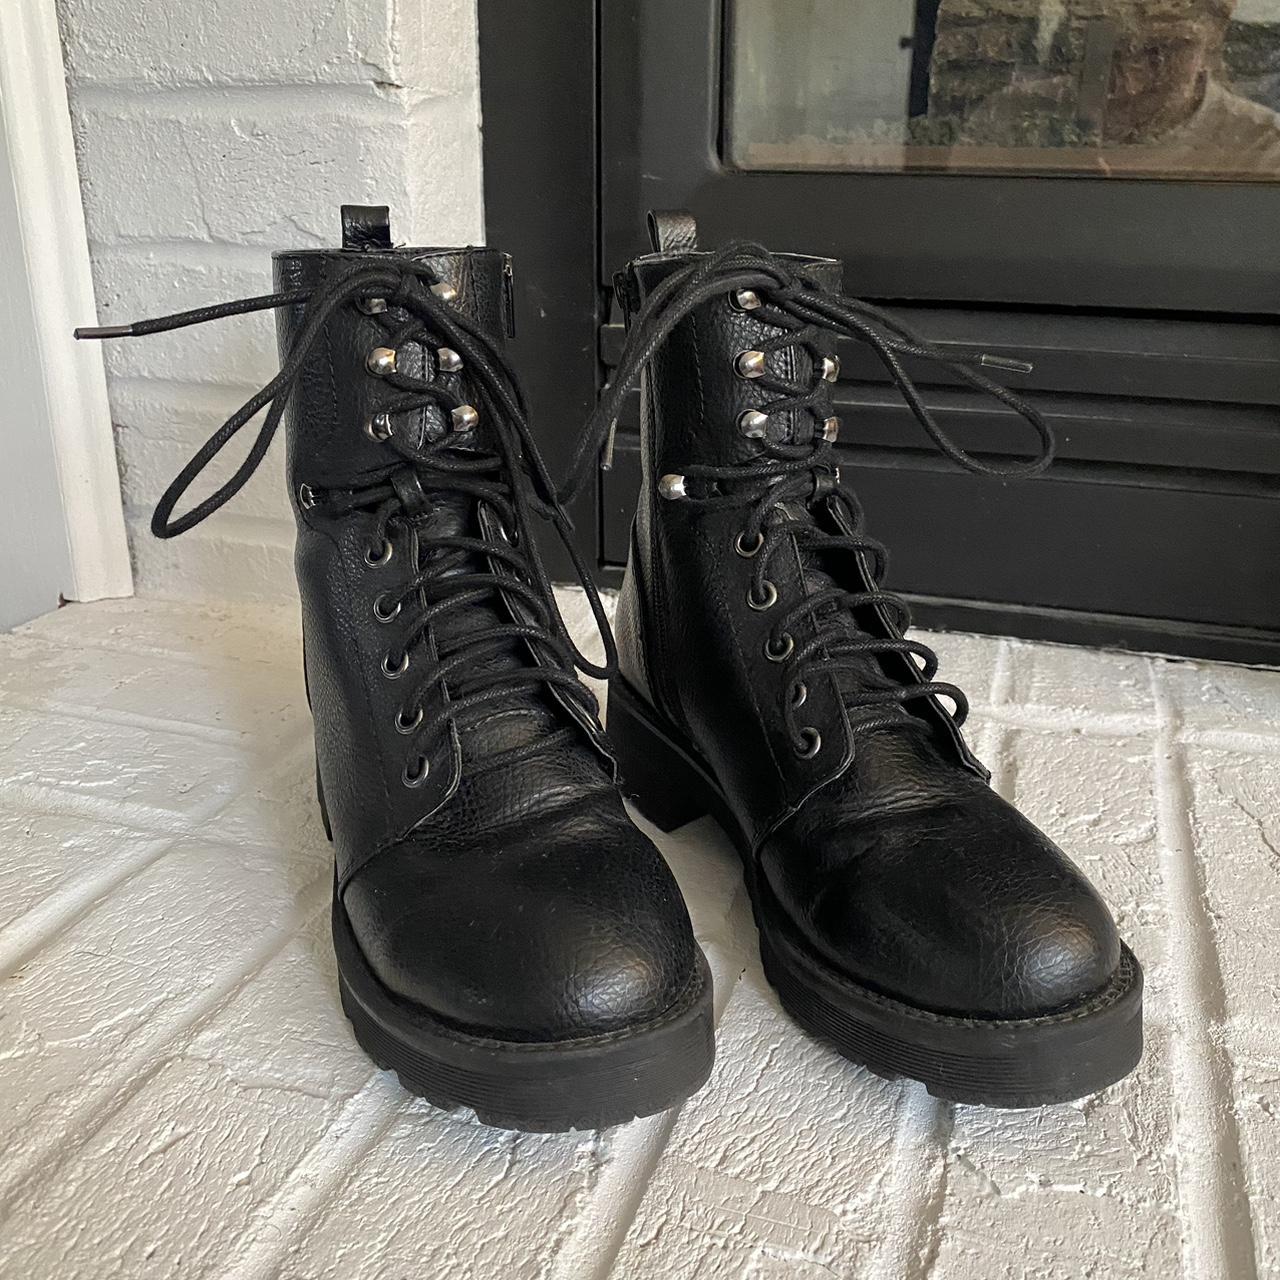 NEW MIA Combat boots - Black - lace up These combat... - Depop